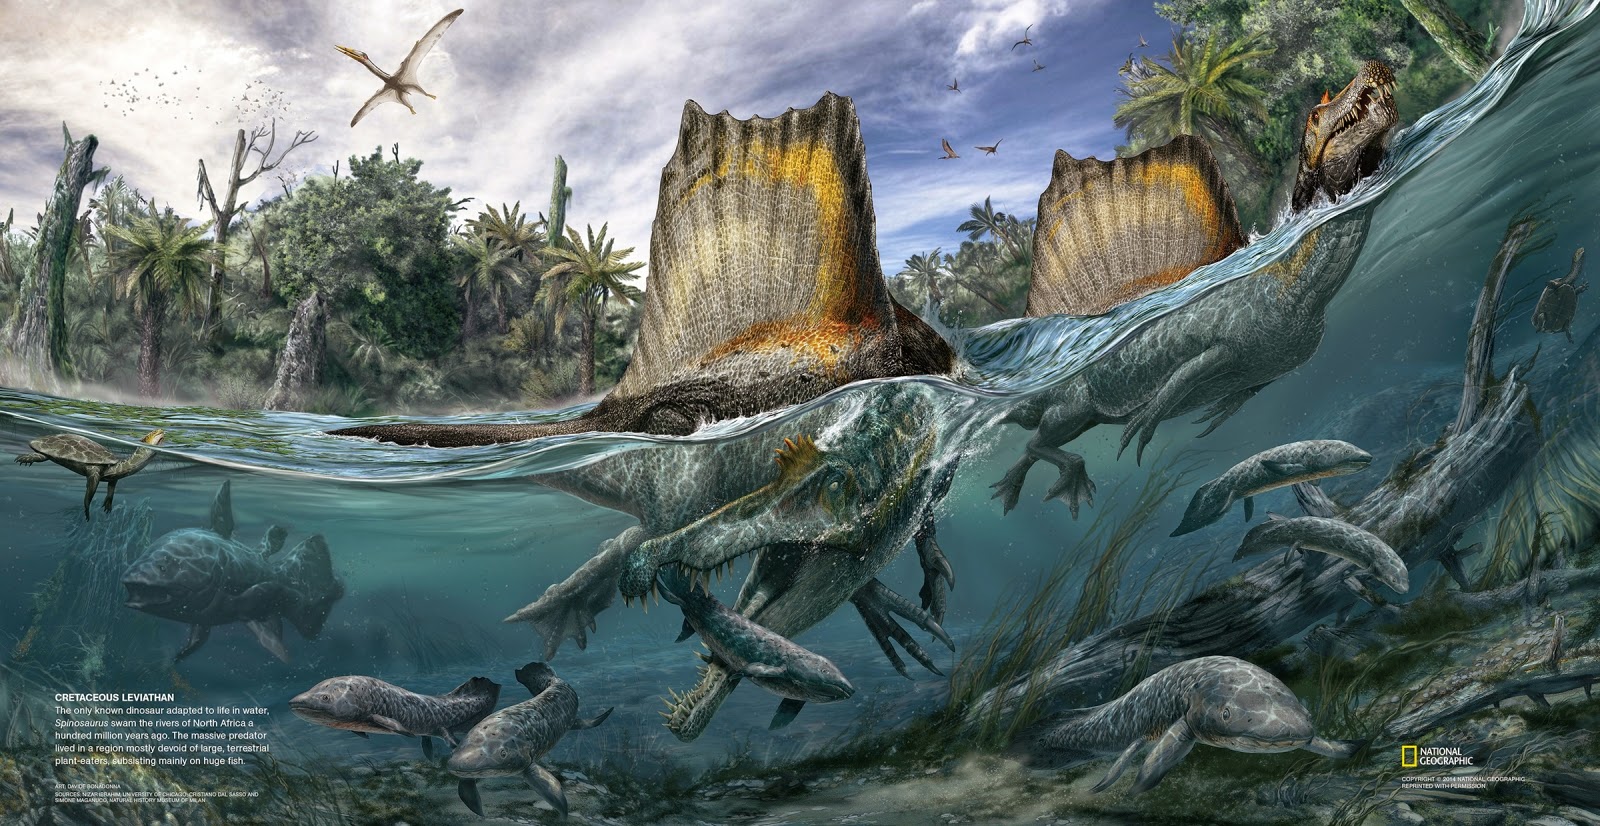 Spinosaurus Fishiness Part N Sauropod Vertebra Picture Of The Week